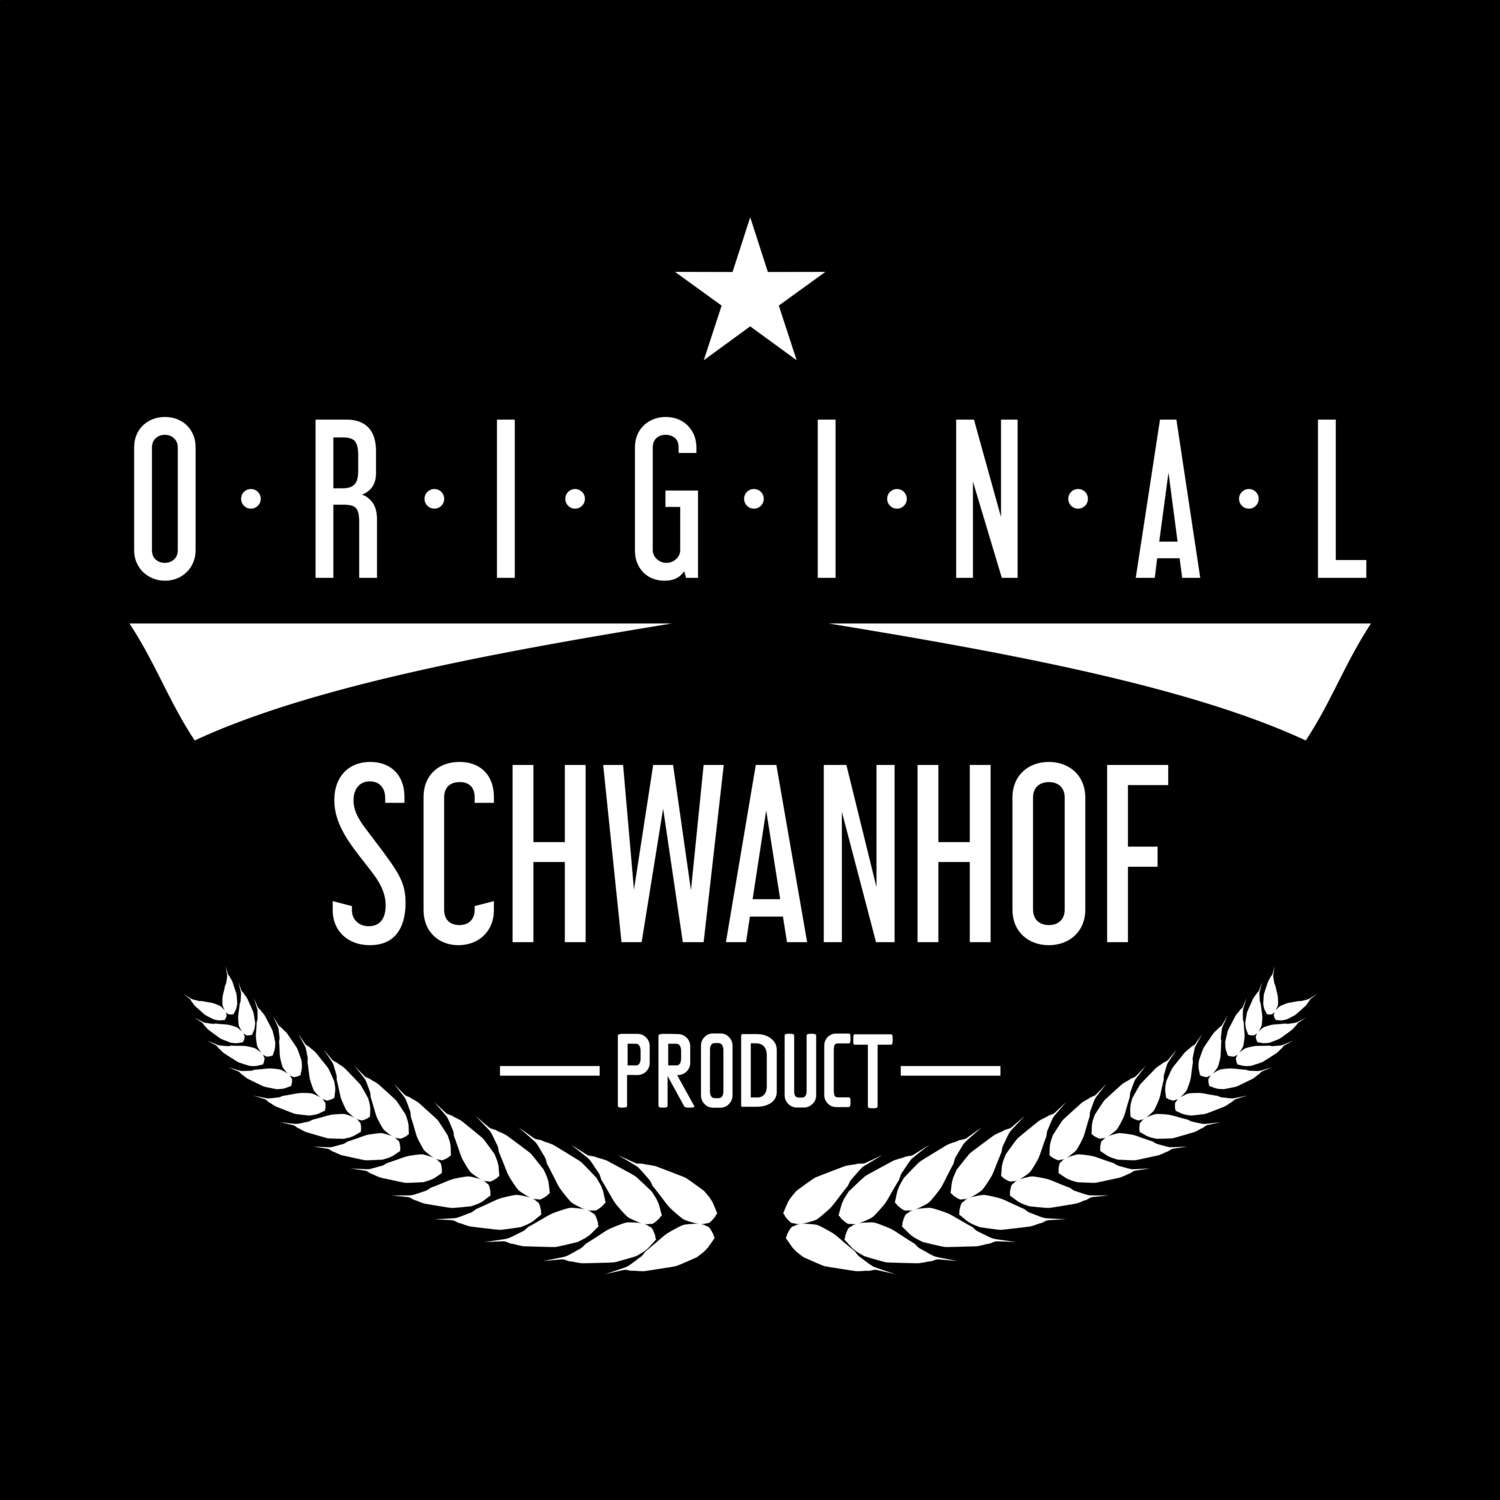 Schwanhof T-Shirt »Original Product«